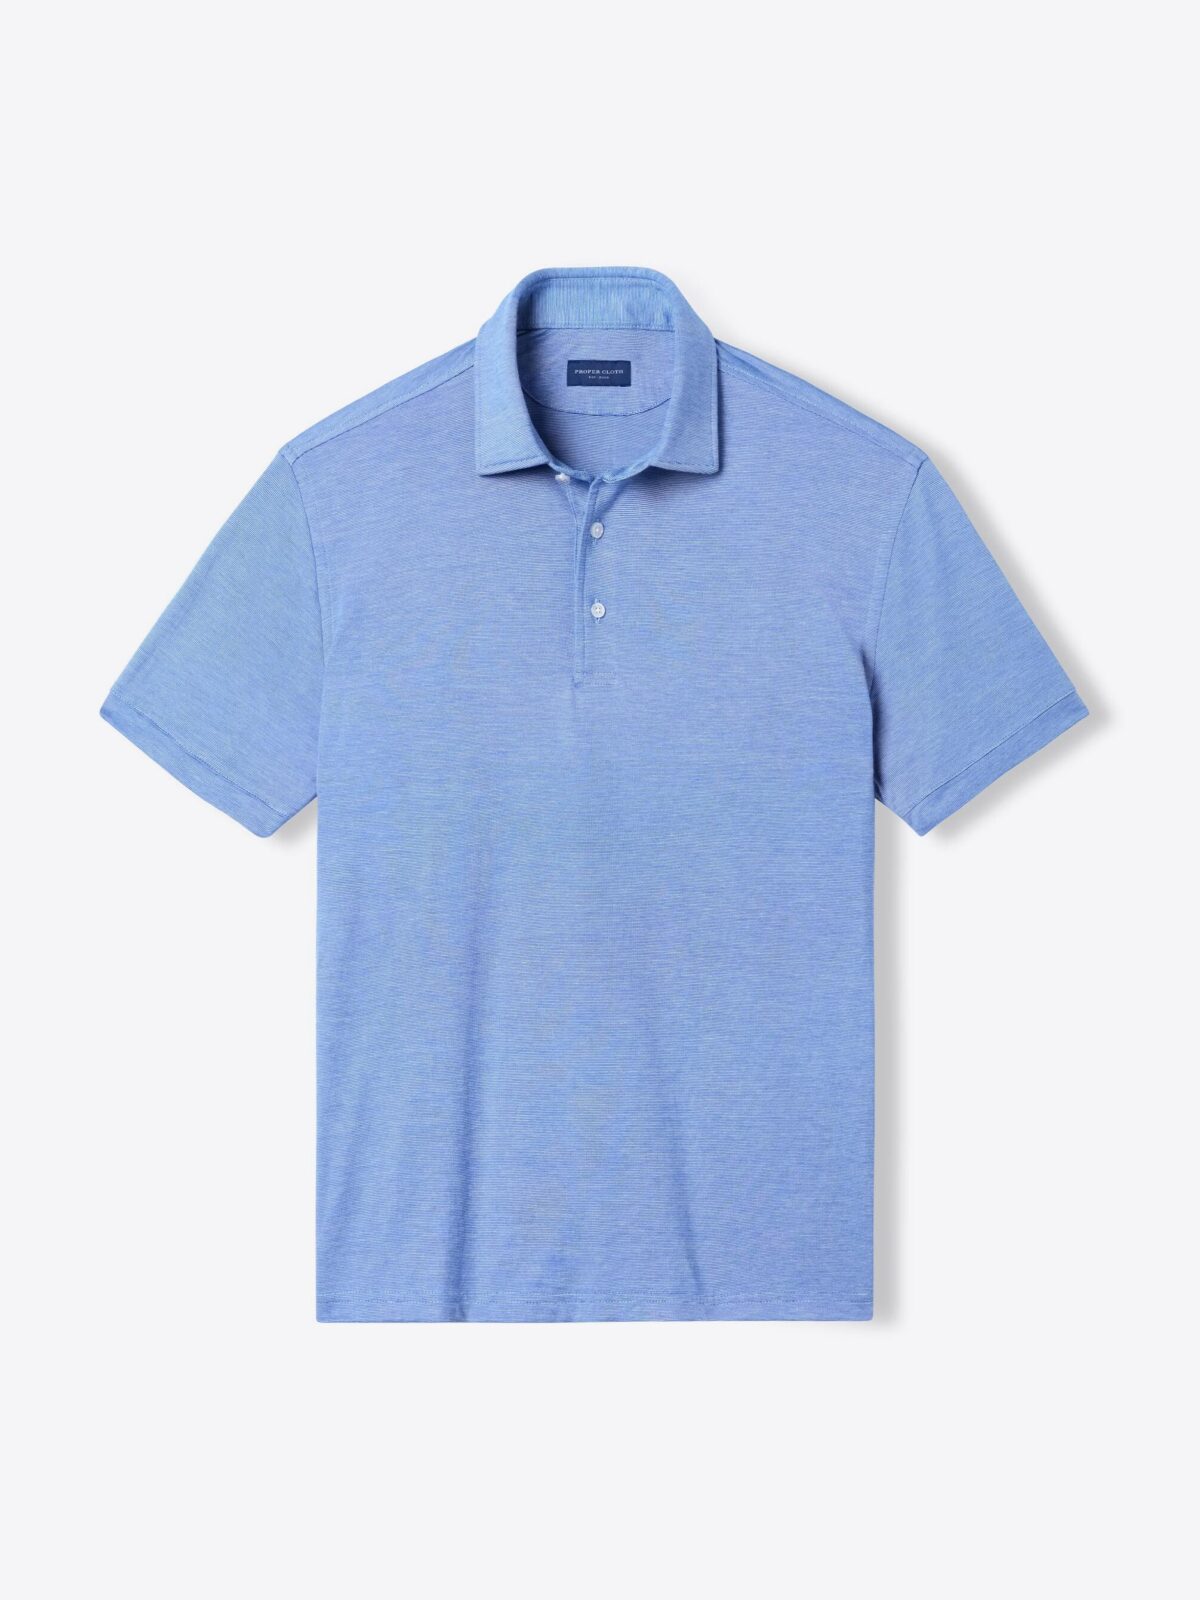 Pinehurst Blue Melange Cotton and Tencel Jersey Shirt by Proper Cloth